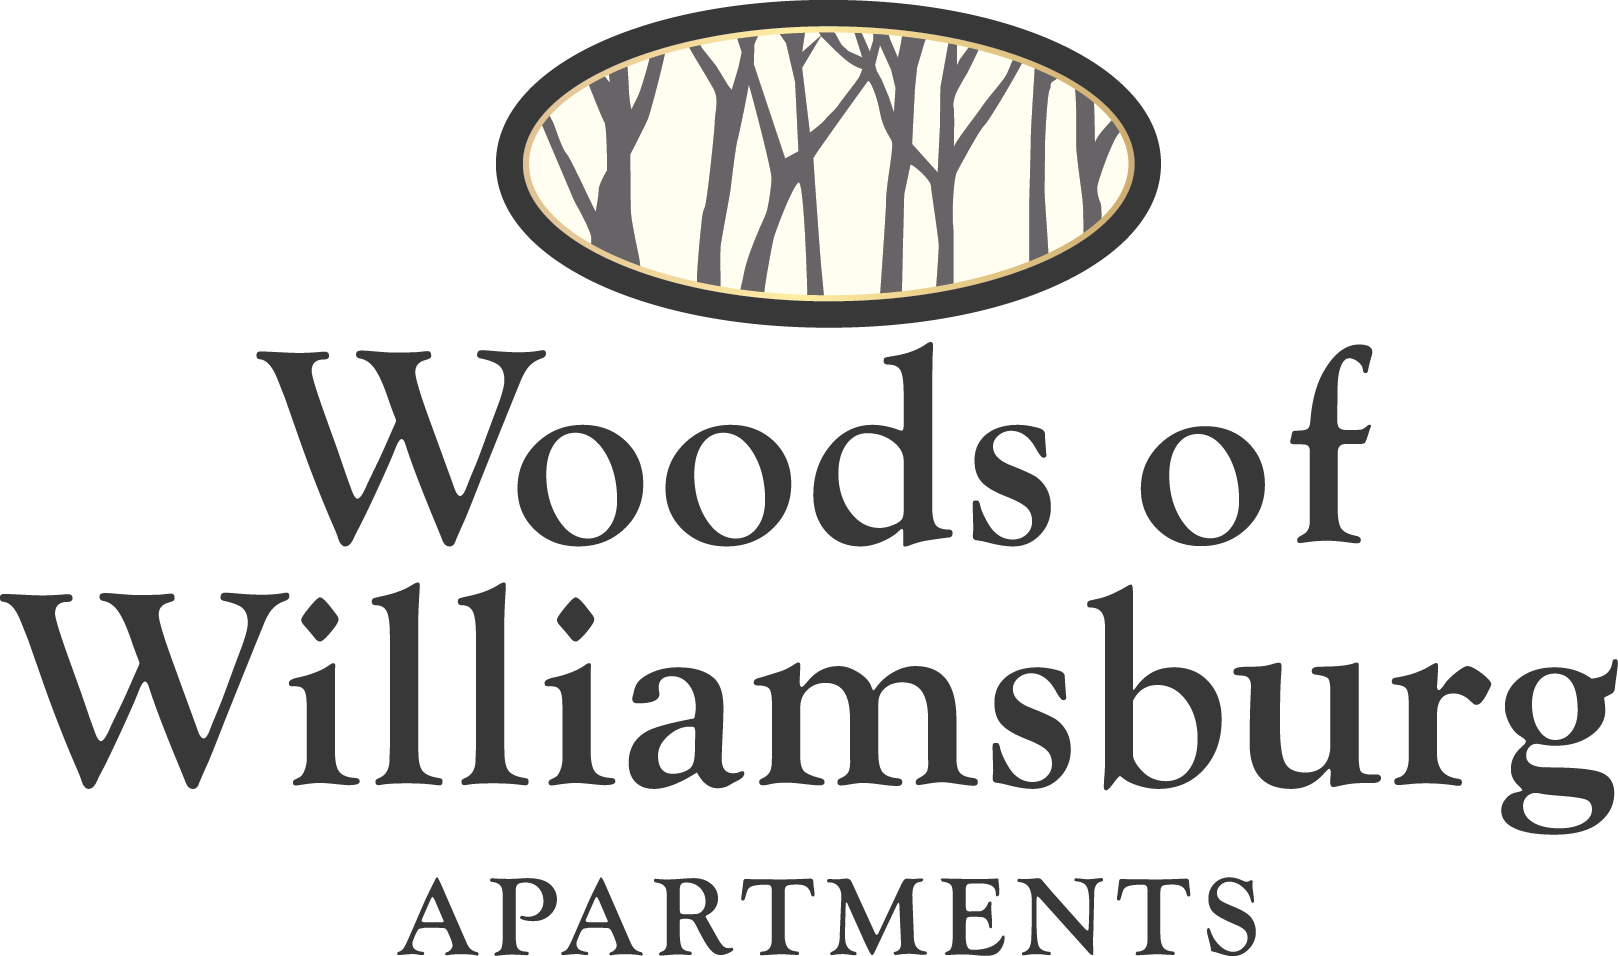 Woods of Williamsburg Apartments